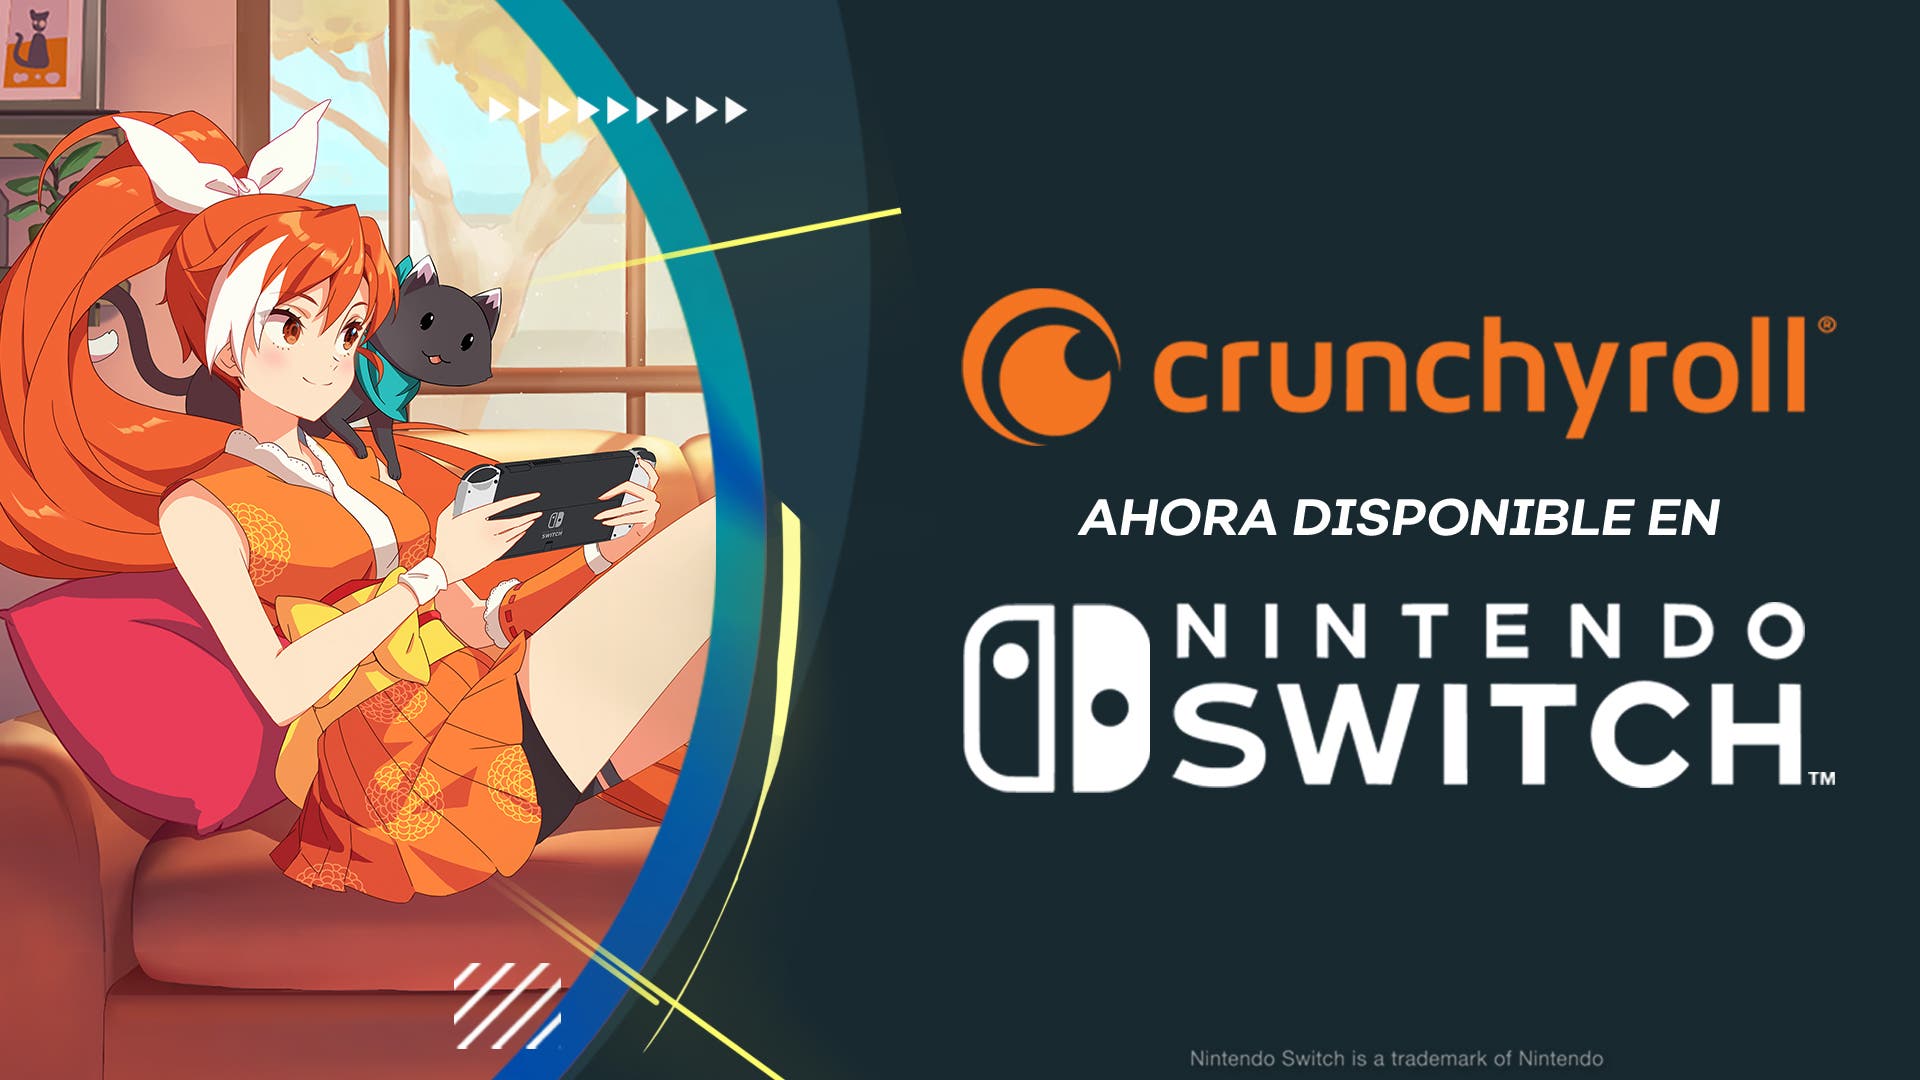 Crunchyroll llega gratis a Nintendo Switch: todos los detalles